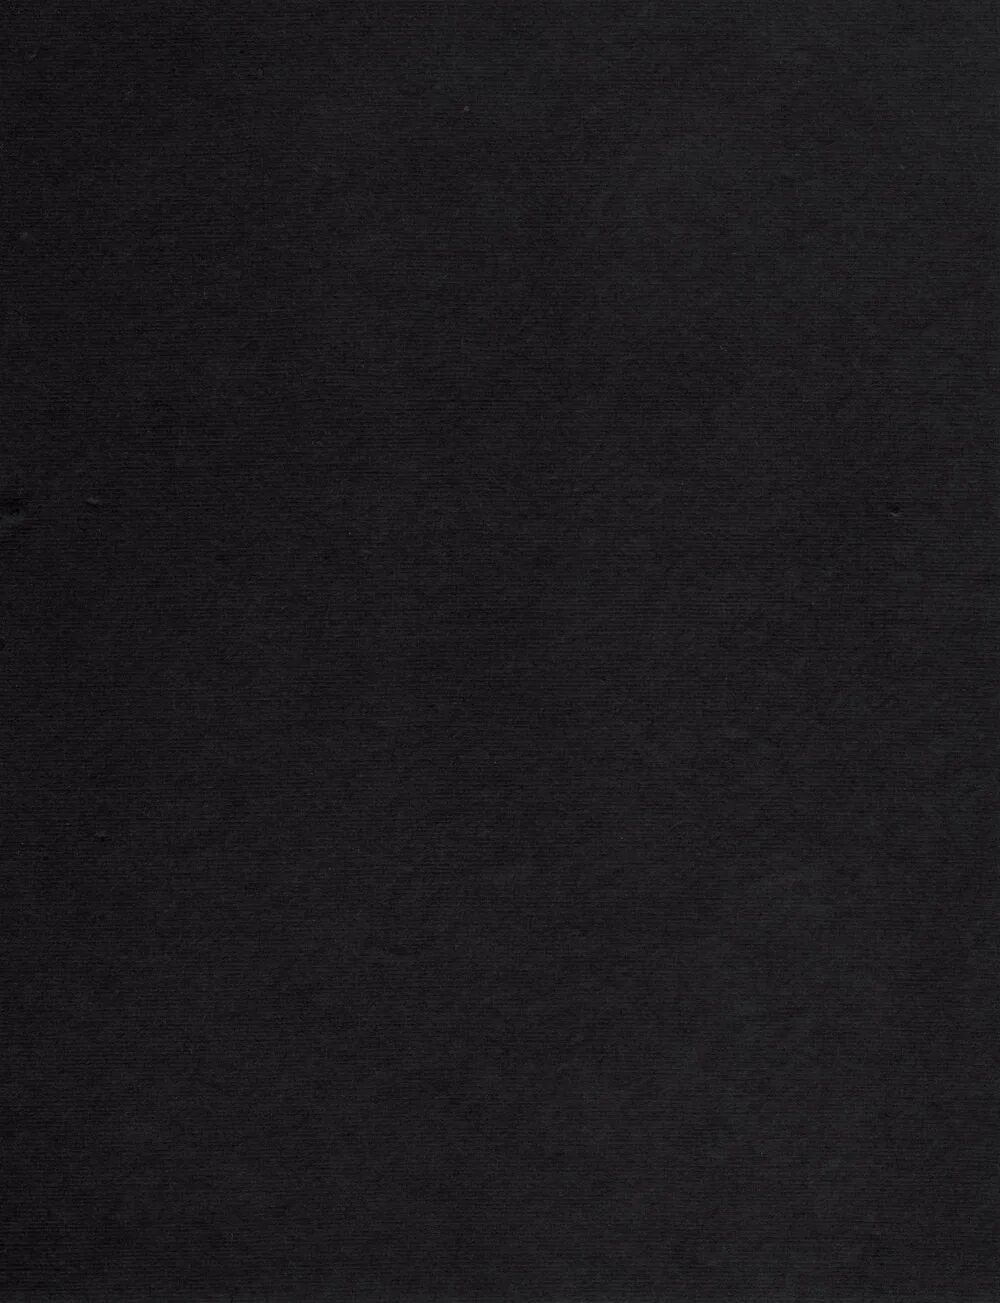 Черная матовая бумага. Черная матовая бумага текстура. Черная тонированная бумага. Бумага черная текстура журнальная. Black Textured blank background.